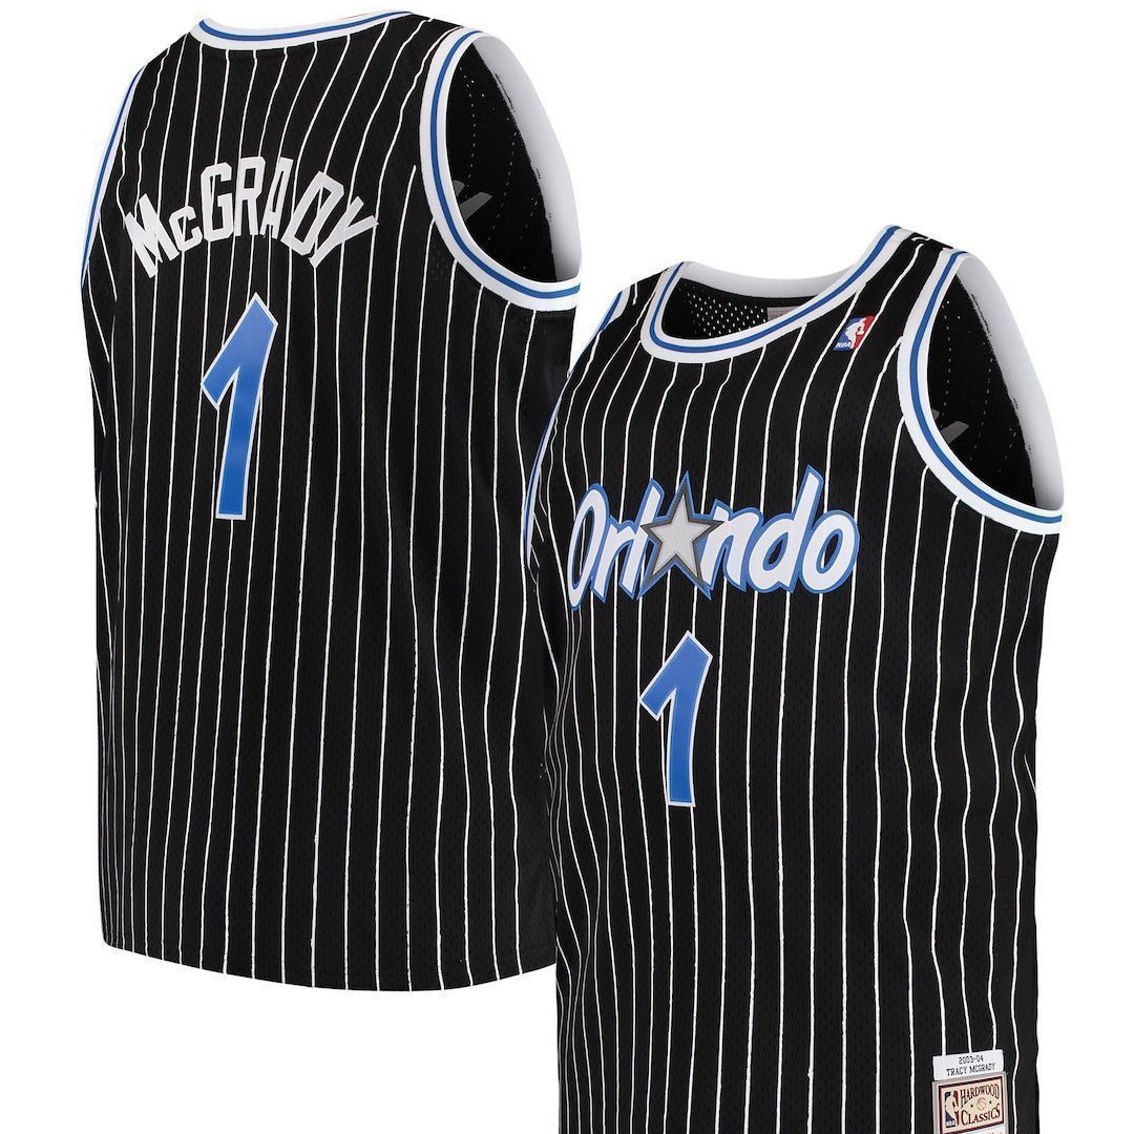 Men's Orlando Magic 1 McGRADY basketball jersey mitchell ness big face  shirt blue 2020